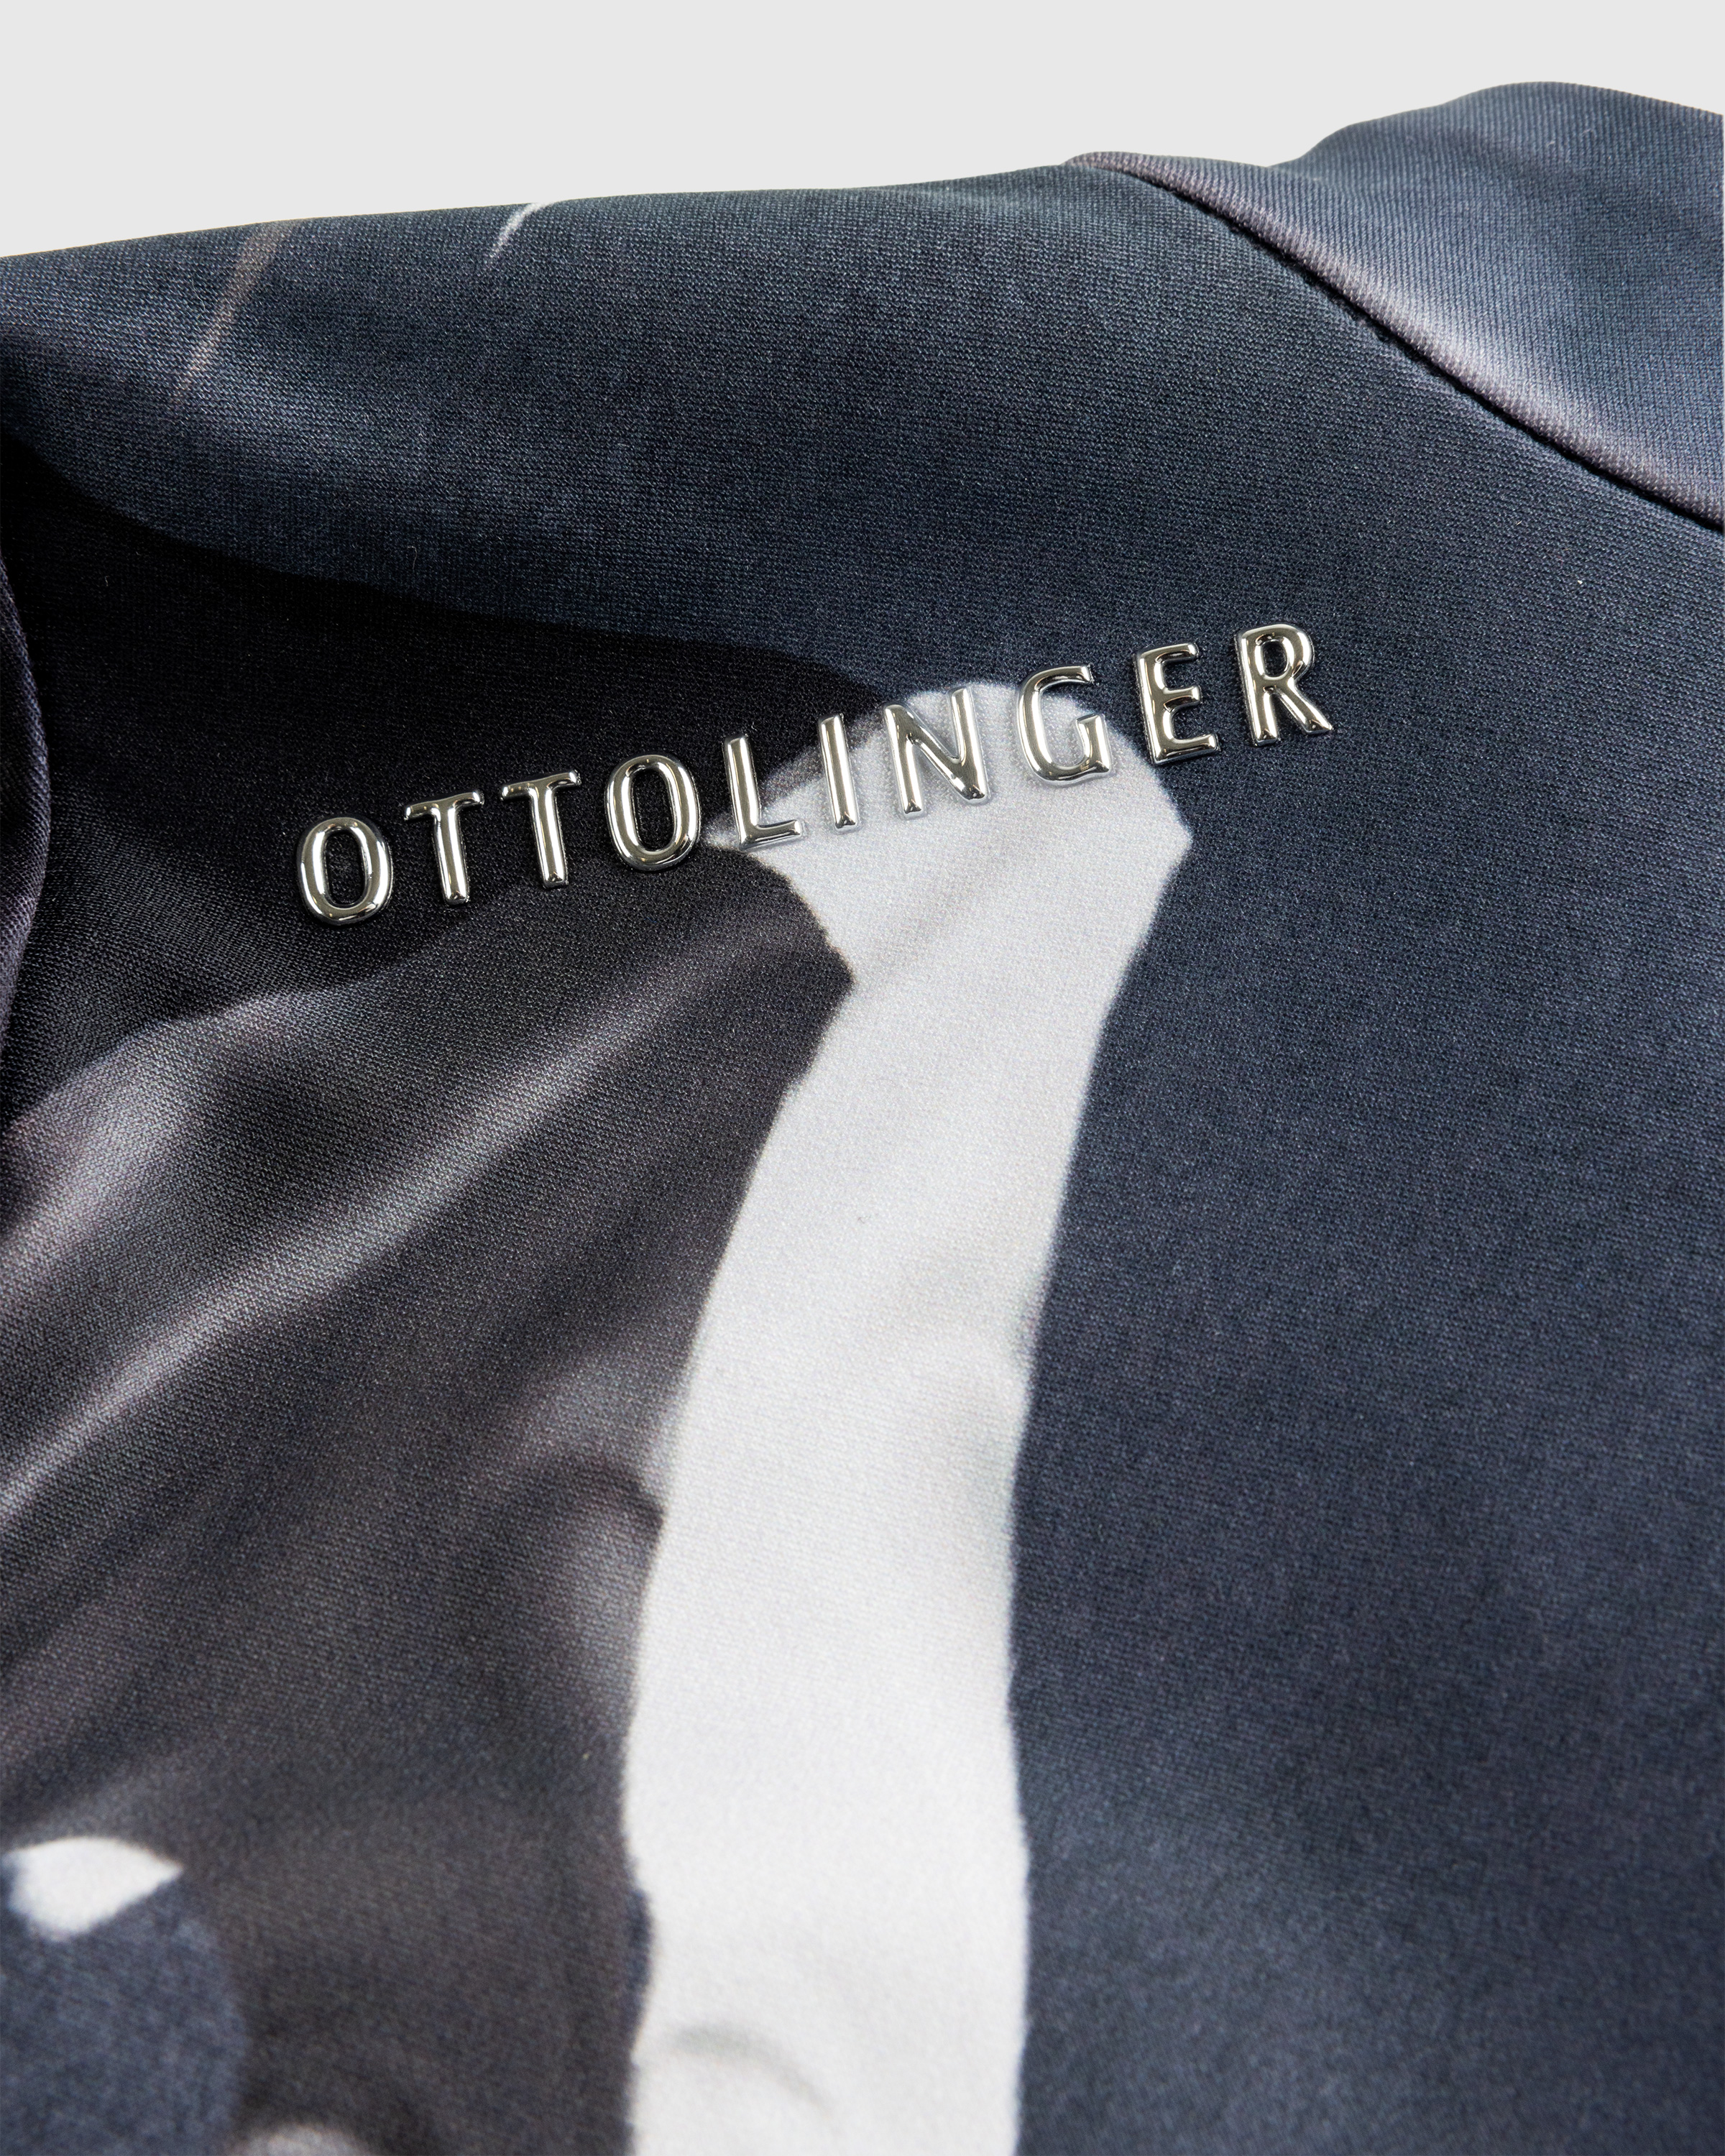 Puma x Ottolinger – Long-Sleeve Bodysuit Multi - Longsleeves - Multi - Image 3